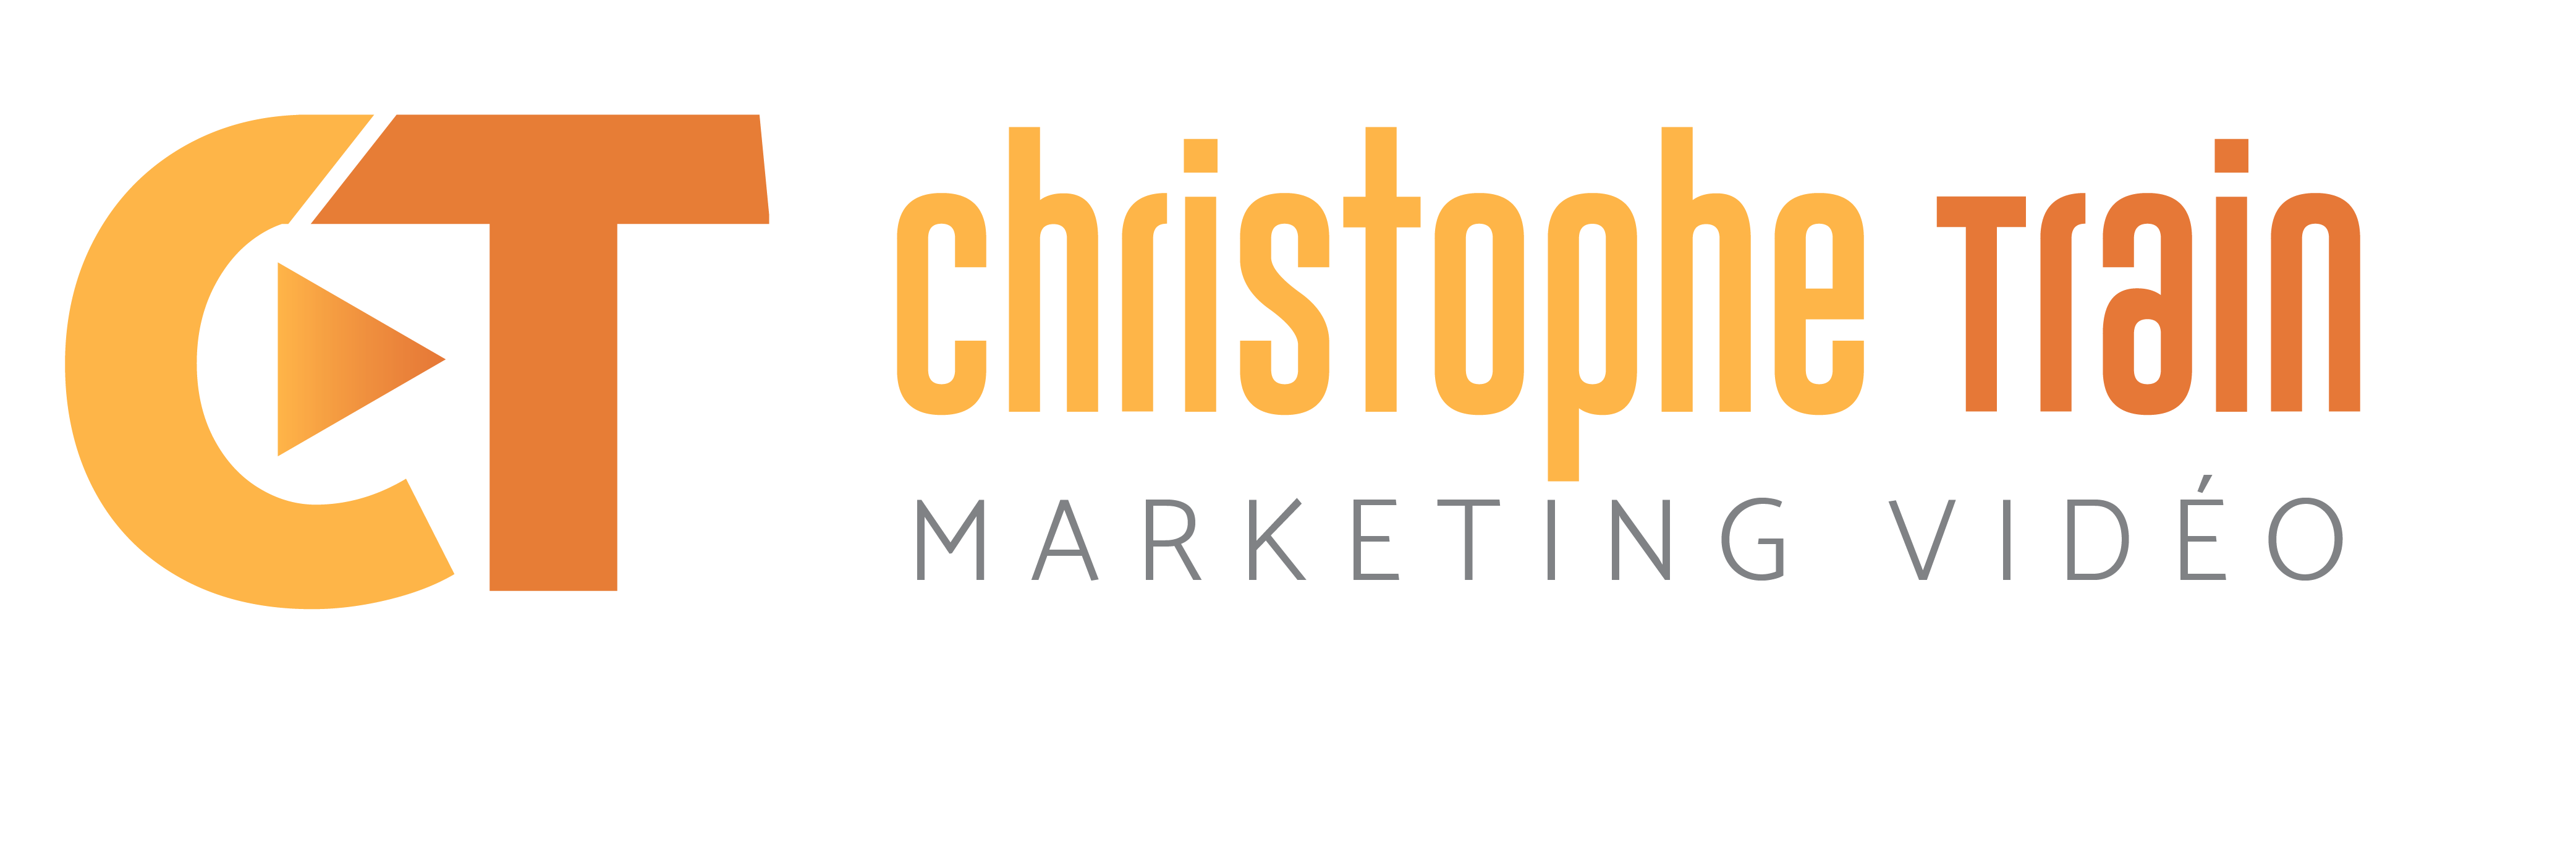 Christophe Train - Marketing Vidéo